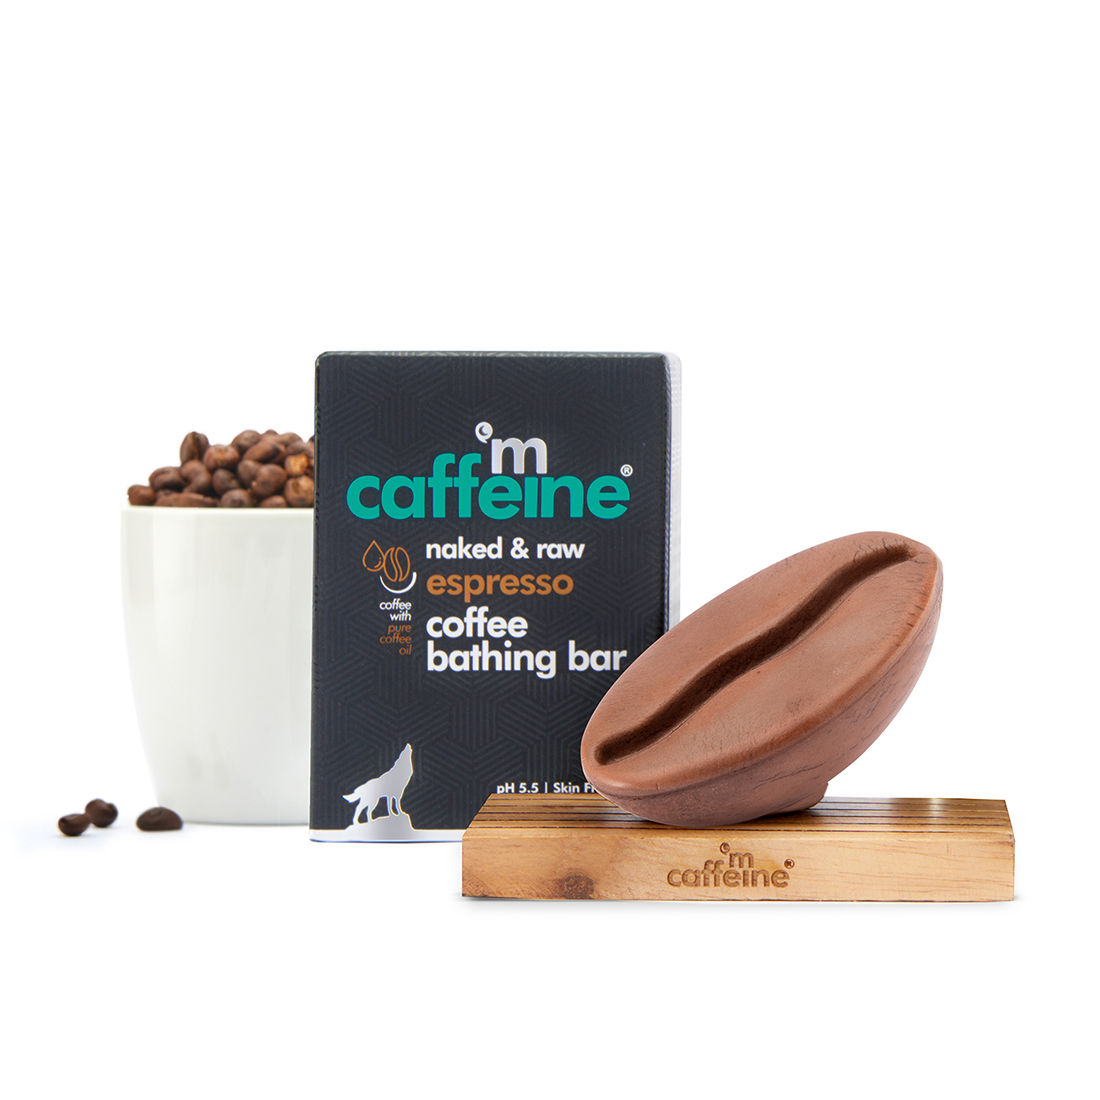 MCaffeine Espresso Coffee Bathing Bar - pH 5.5 Soap Free Syndet Bar with Vitamin E for Deep Cleansing